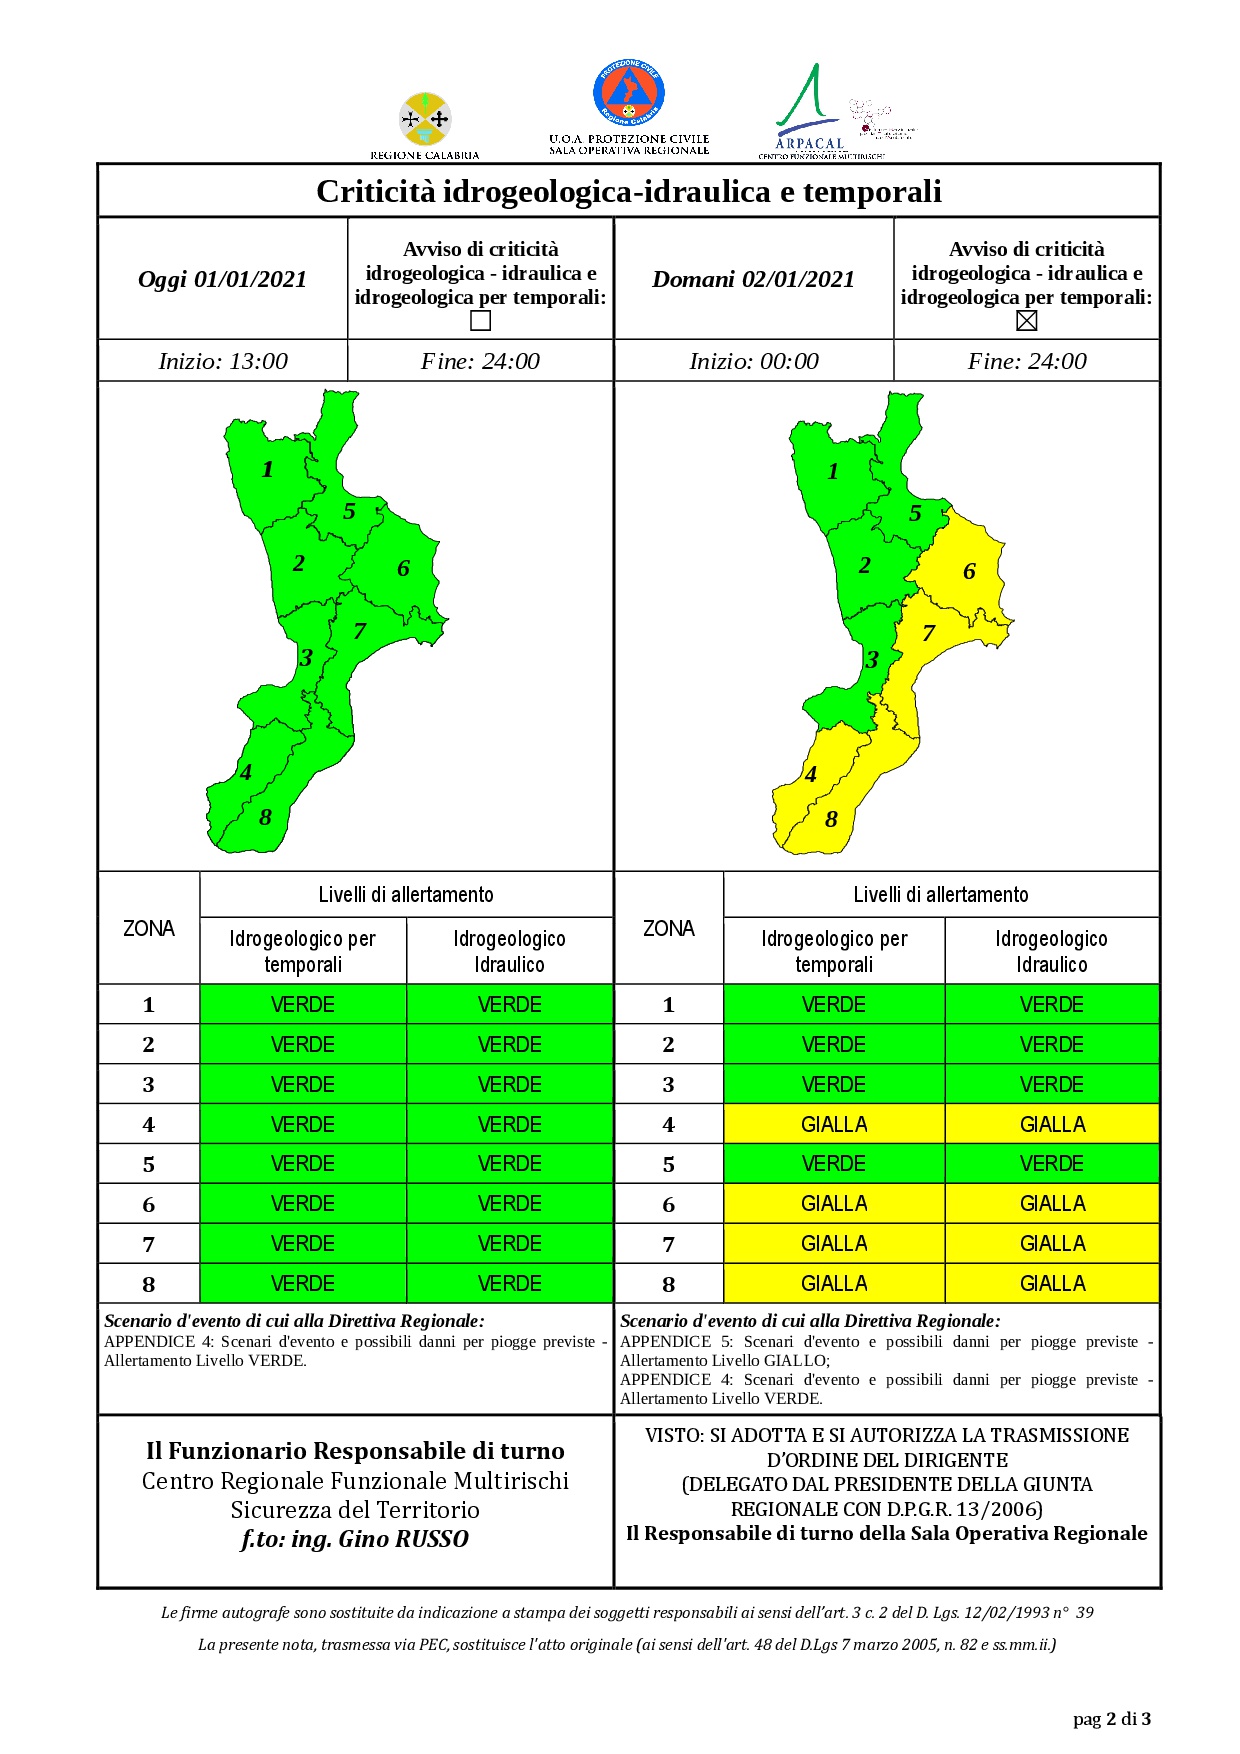 Criticità idrogeologica-idraulica e temporali in Calabria 01-01-2021